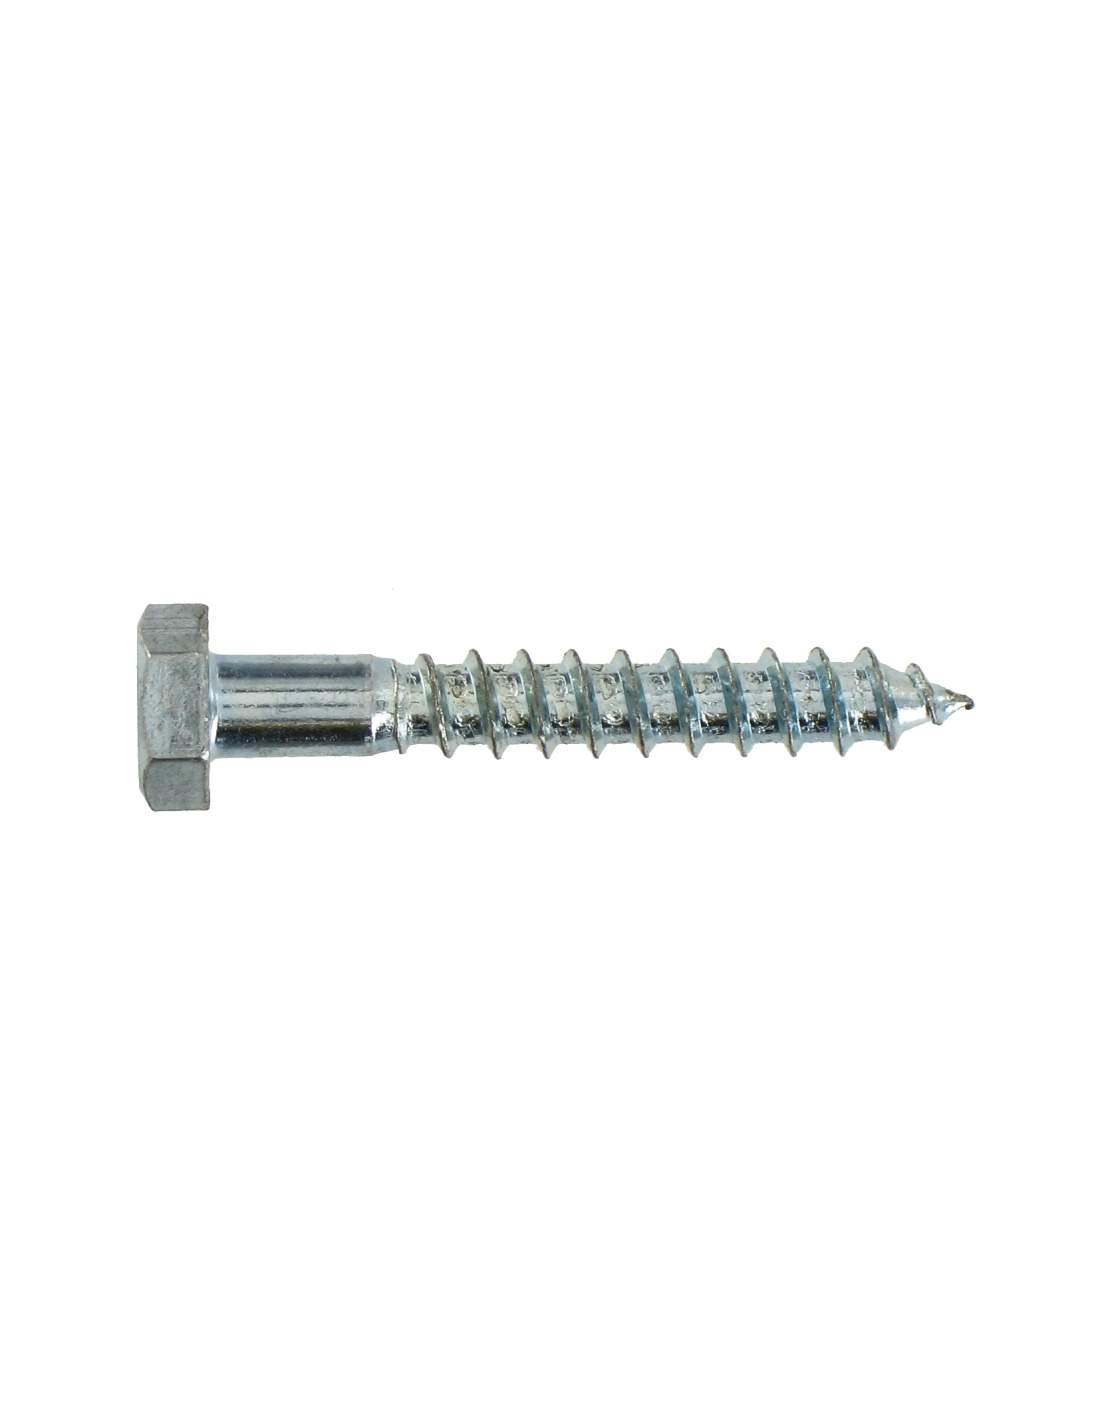 Zinc-plated steel lag bolt 8x100, 3 pieces.